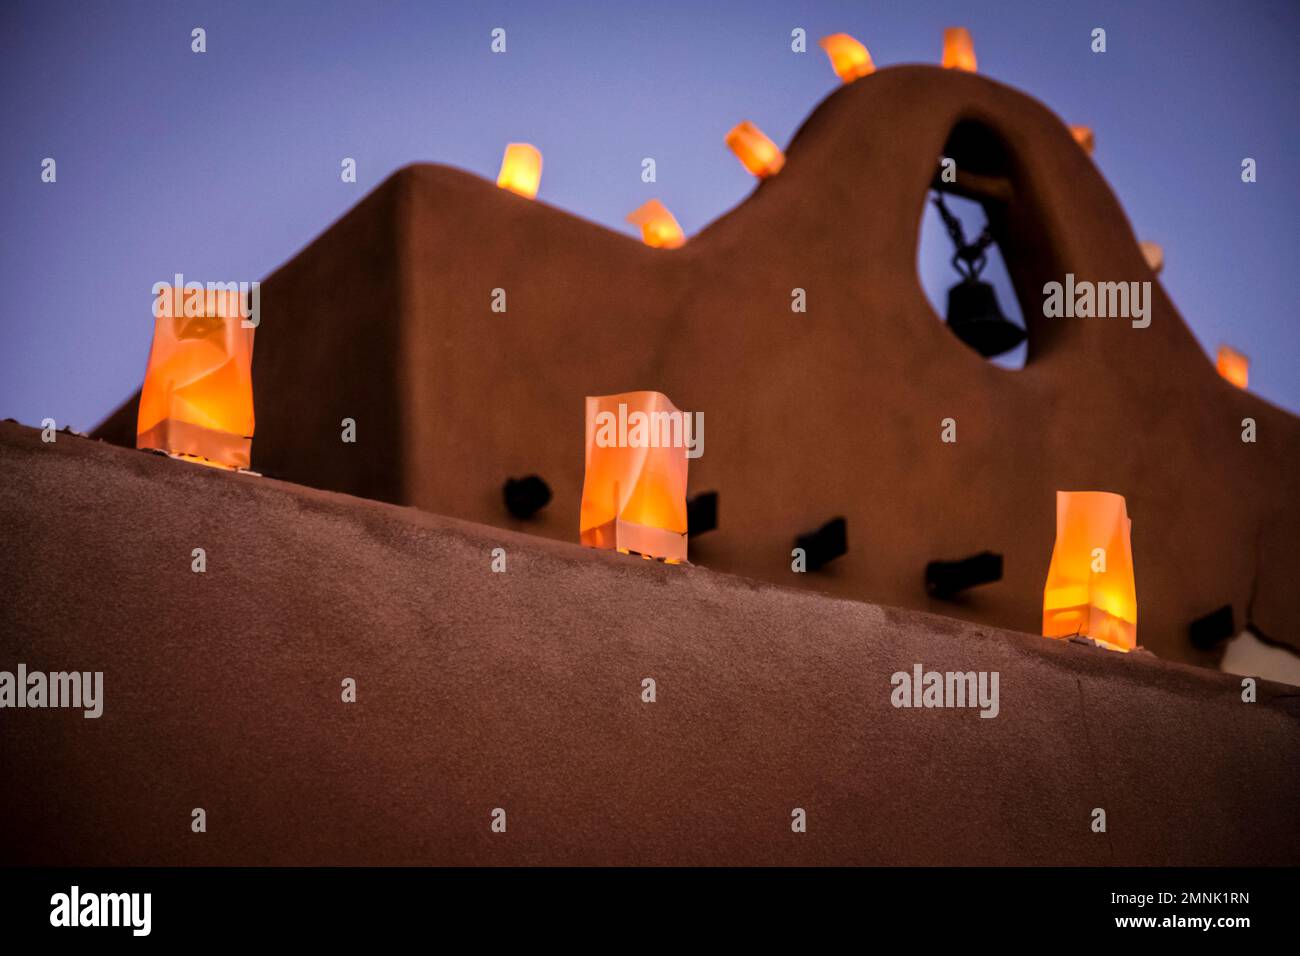 USA, New Mexico, Santa Fe, Traditional farolitos lanterns on adobe building Stock Photo